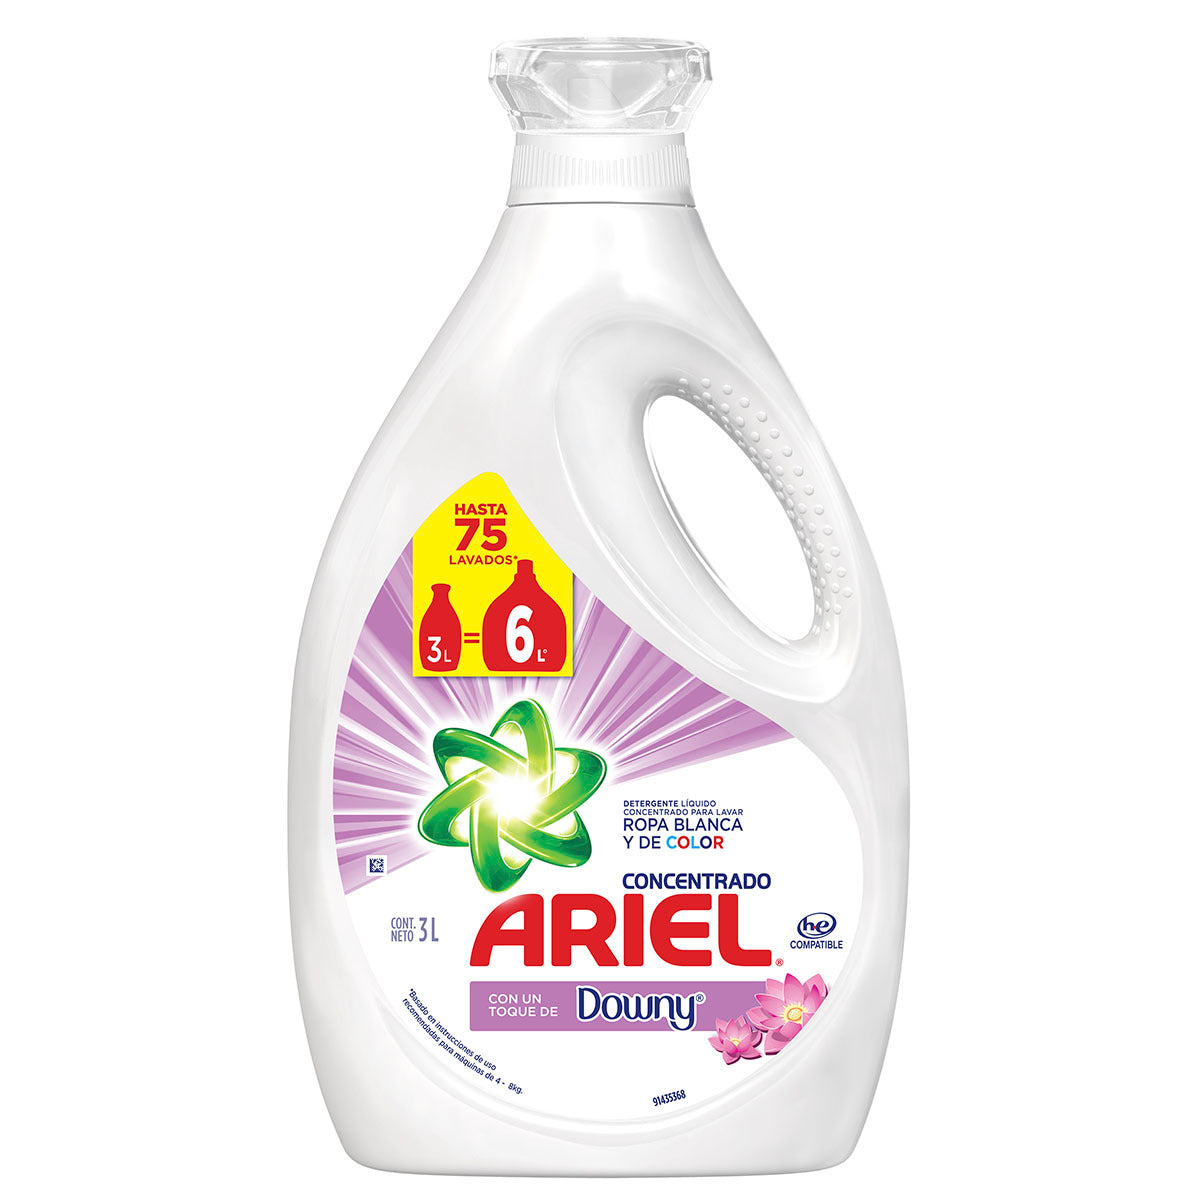 Ariel Power Liquid Detergent With Downy - 101.44oz/3L/4pk